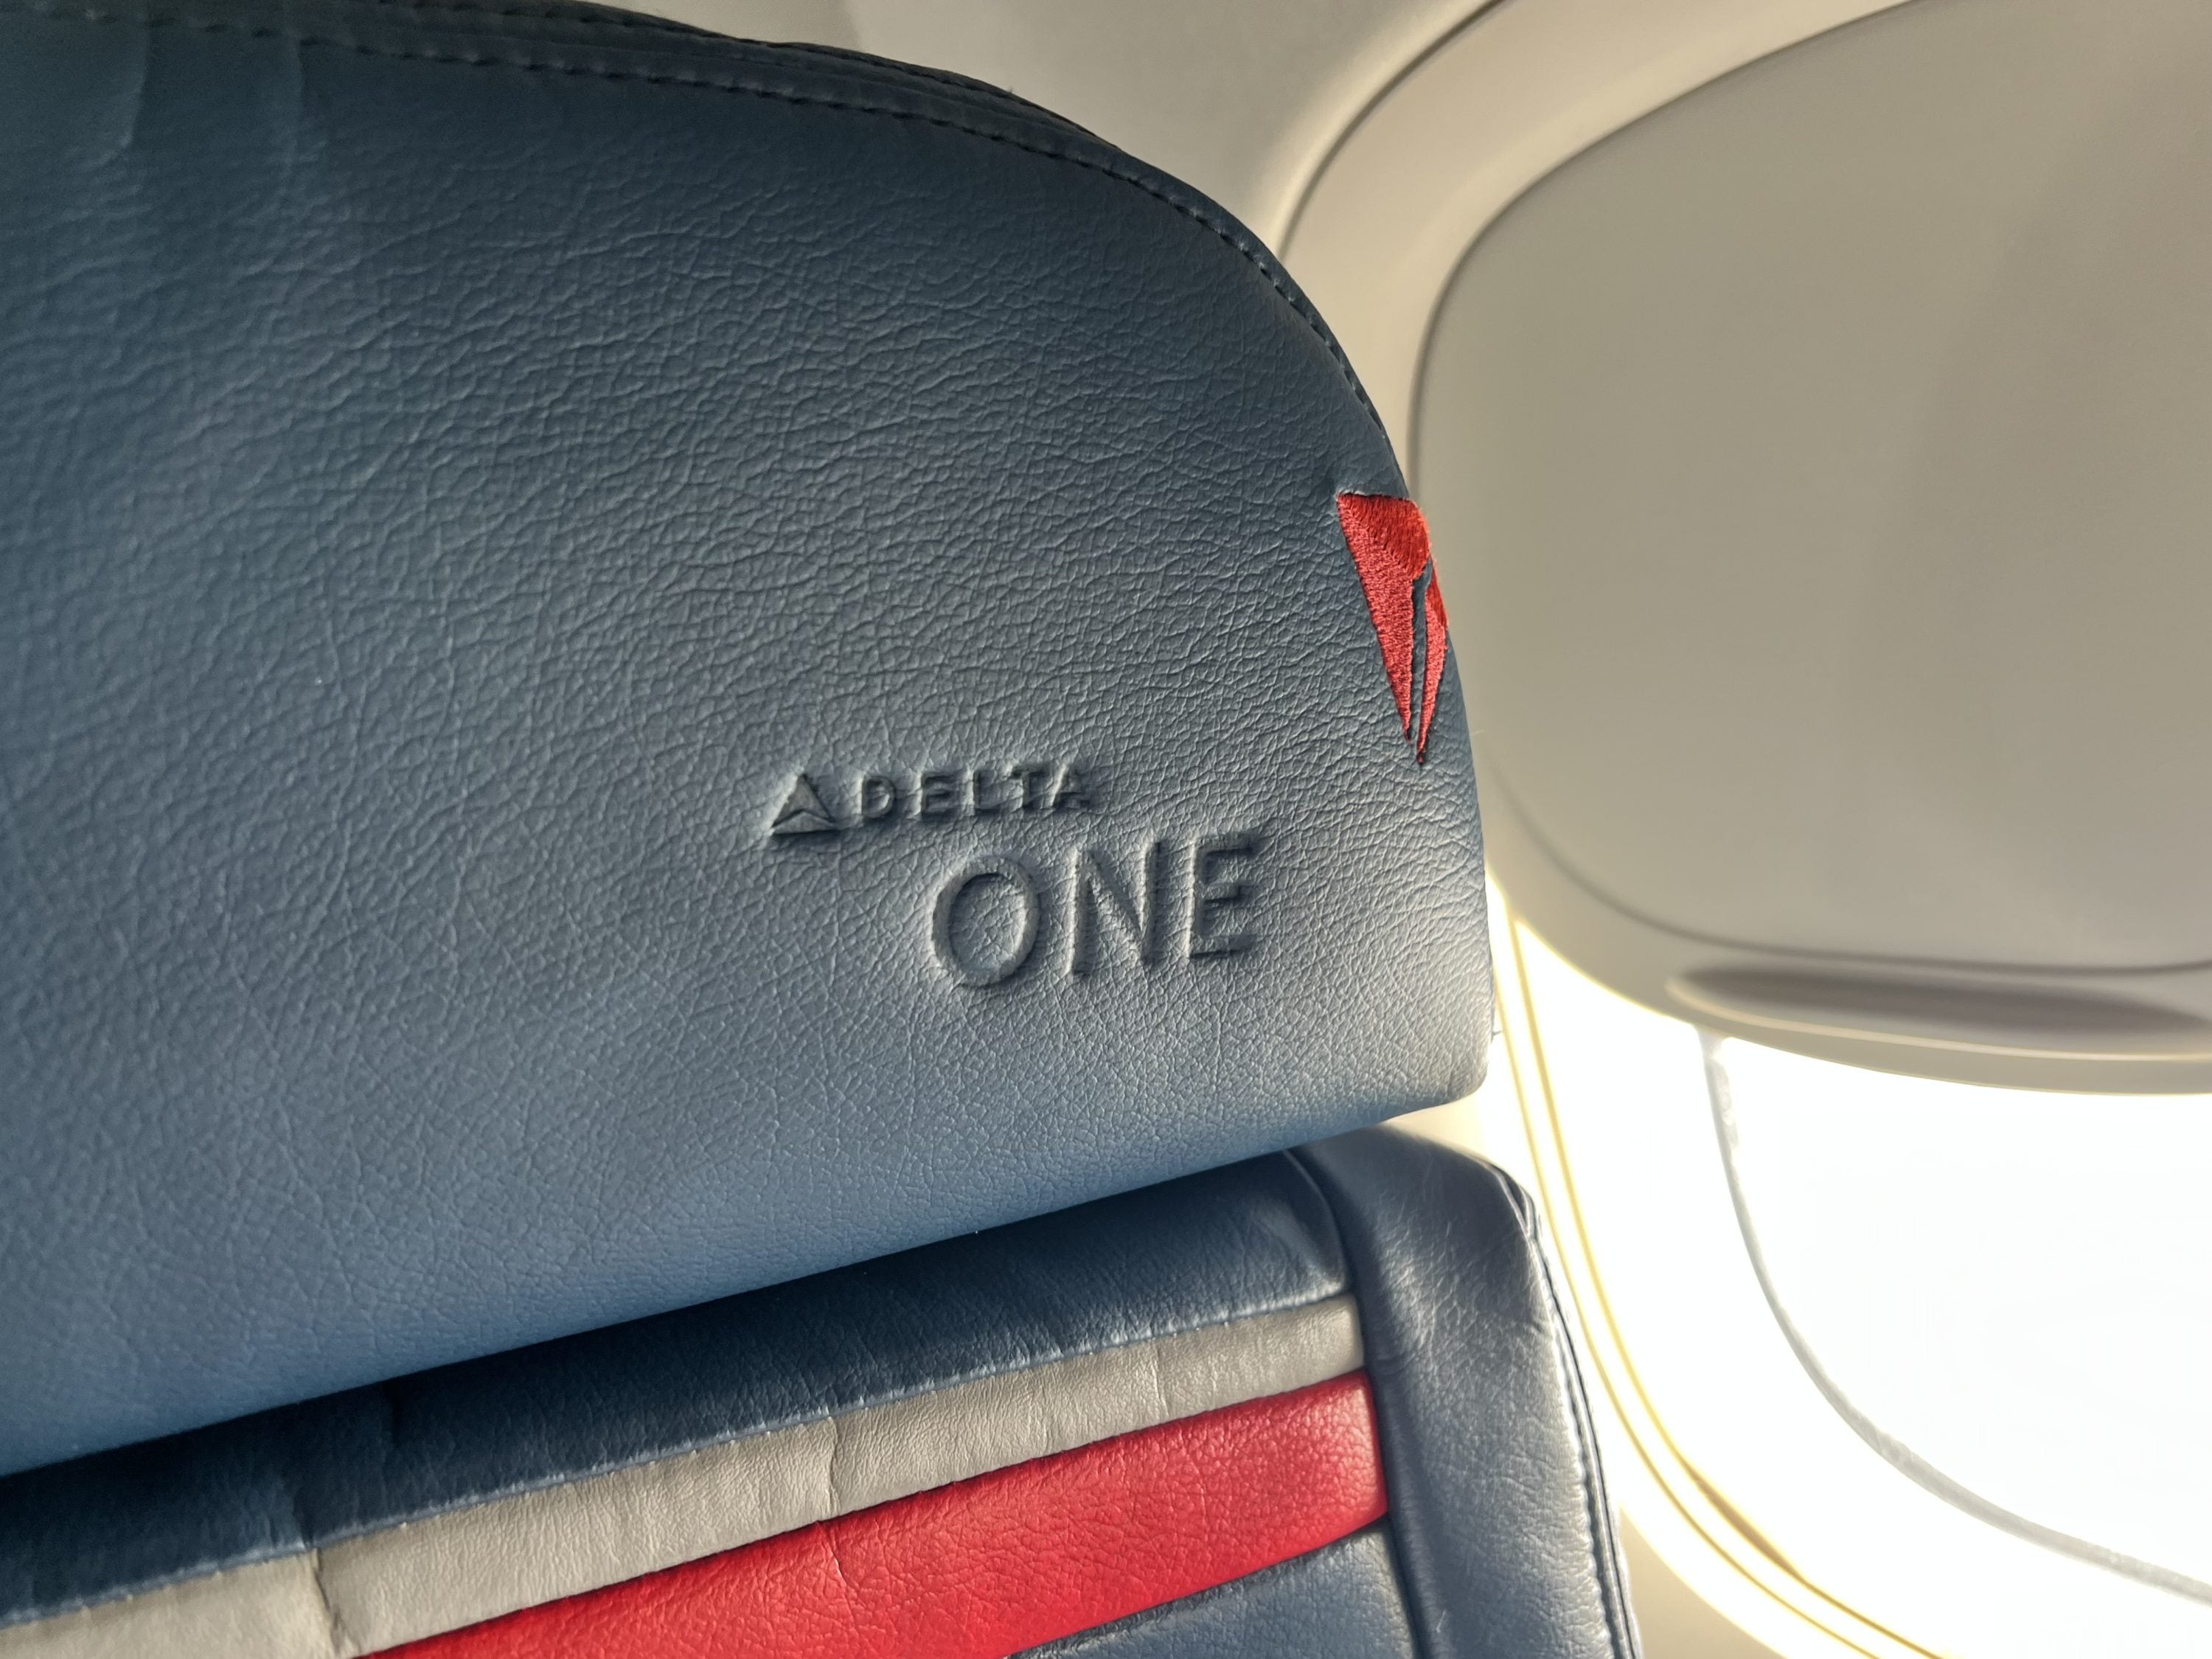 Delta One Seat Branding